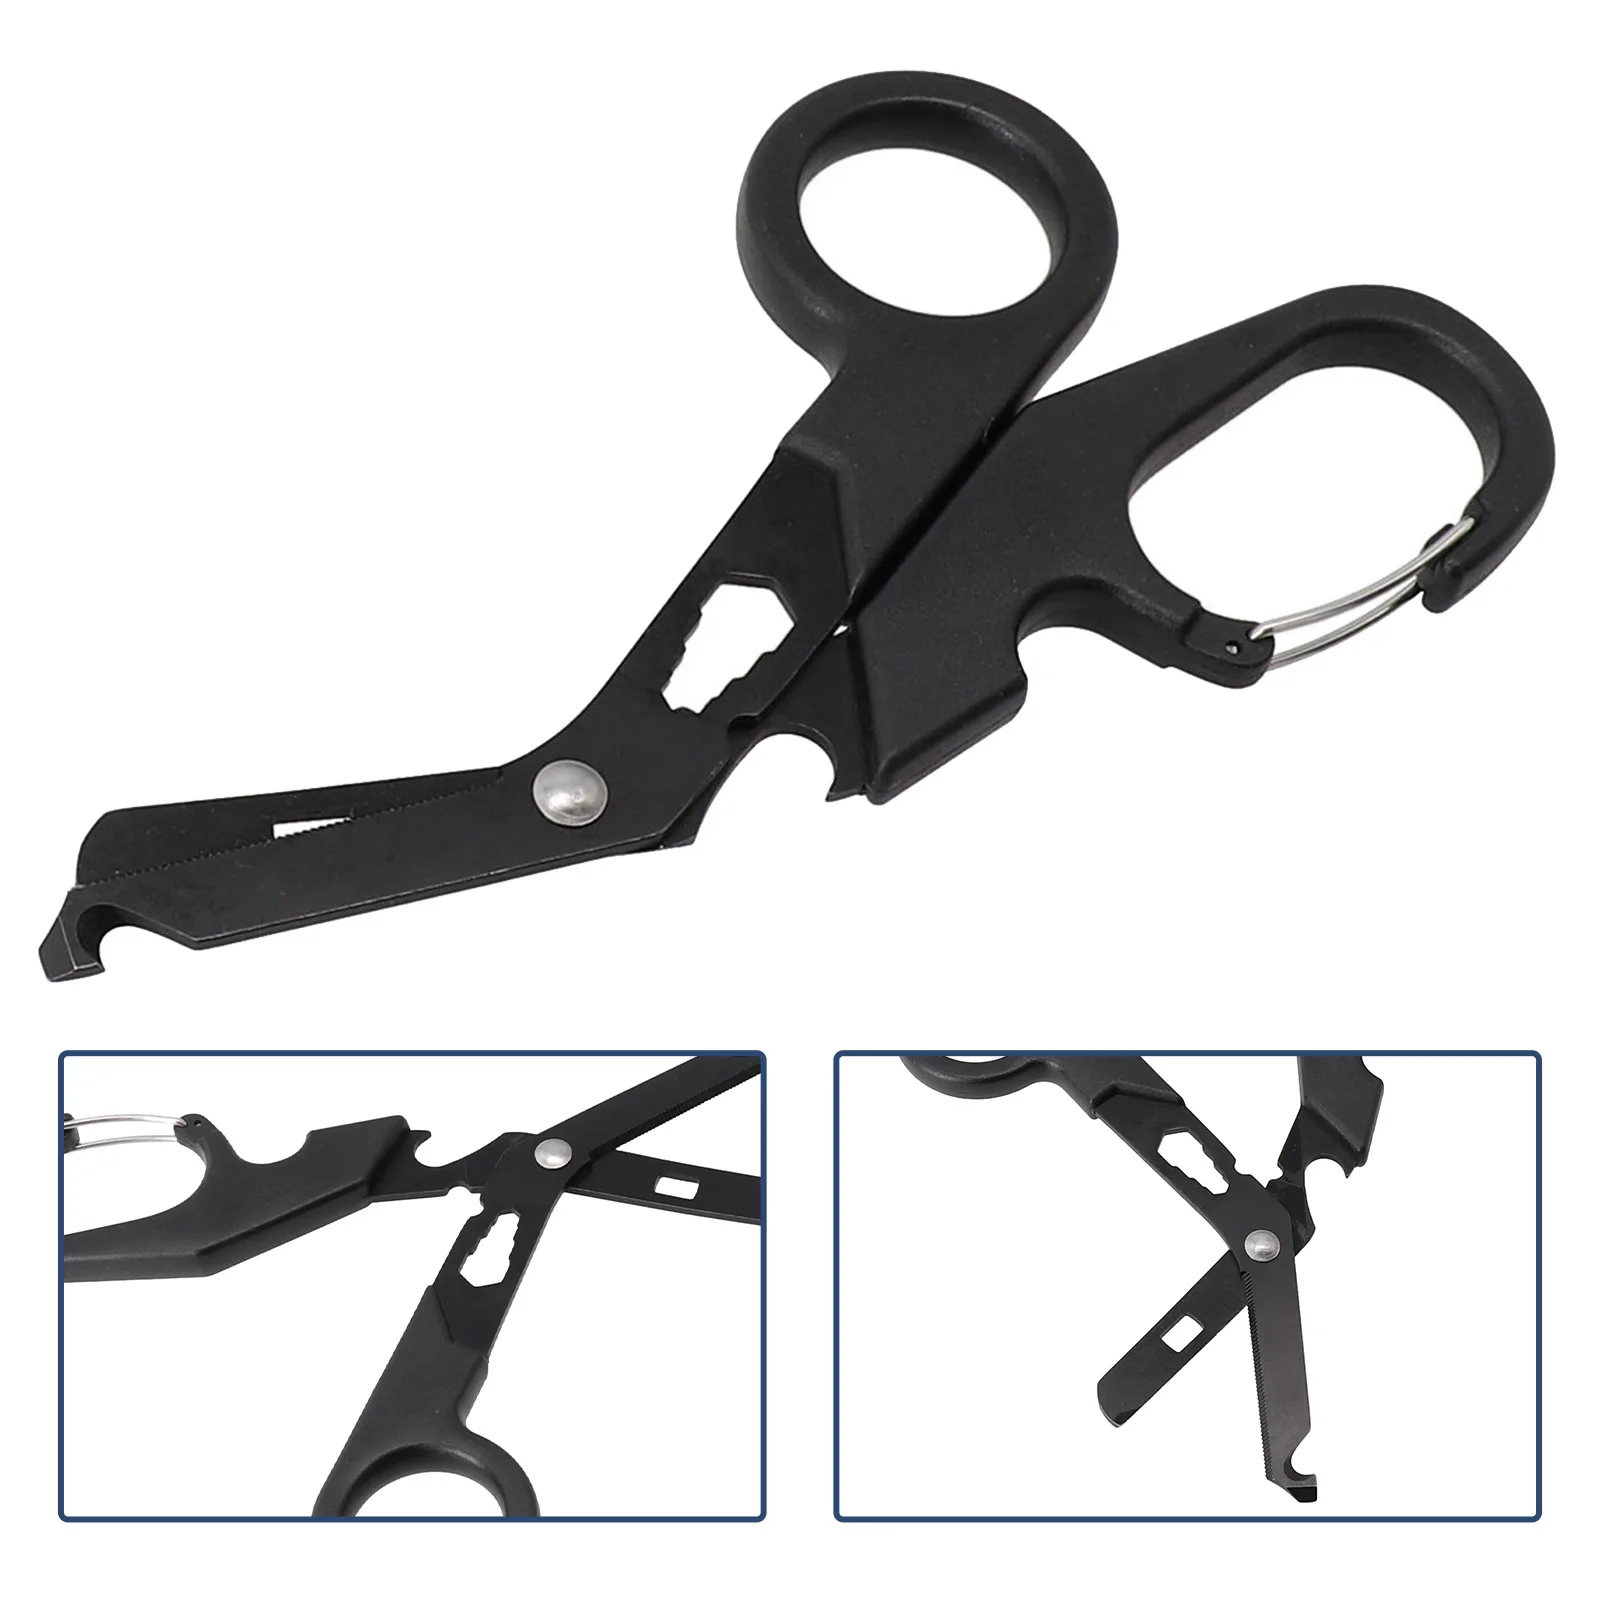 Ssors aid scissors trauma shears survival tool outdoor survival tool combination tools thumb200